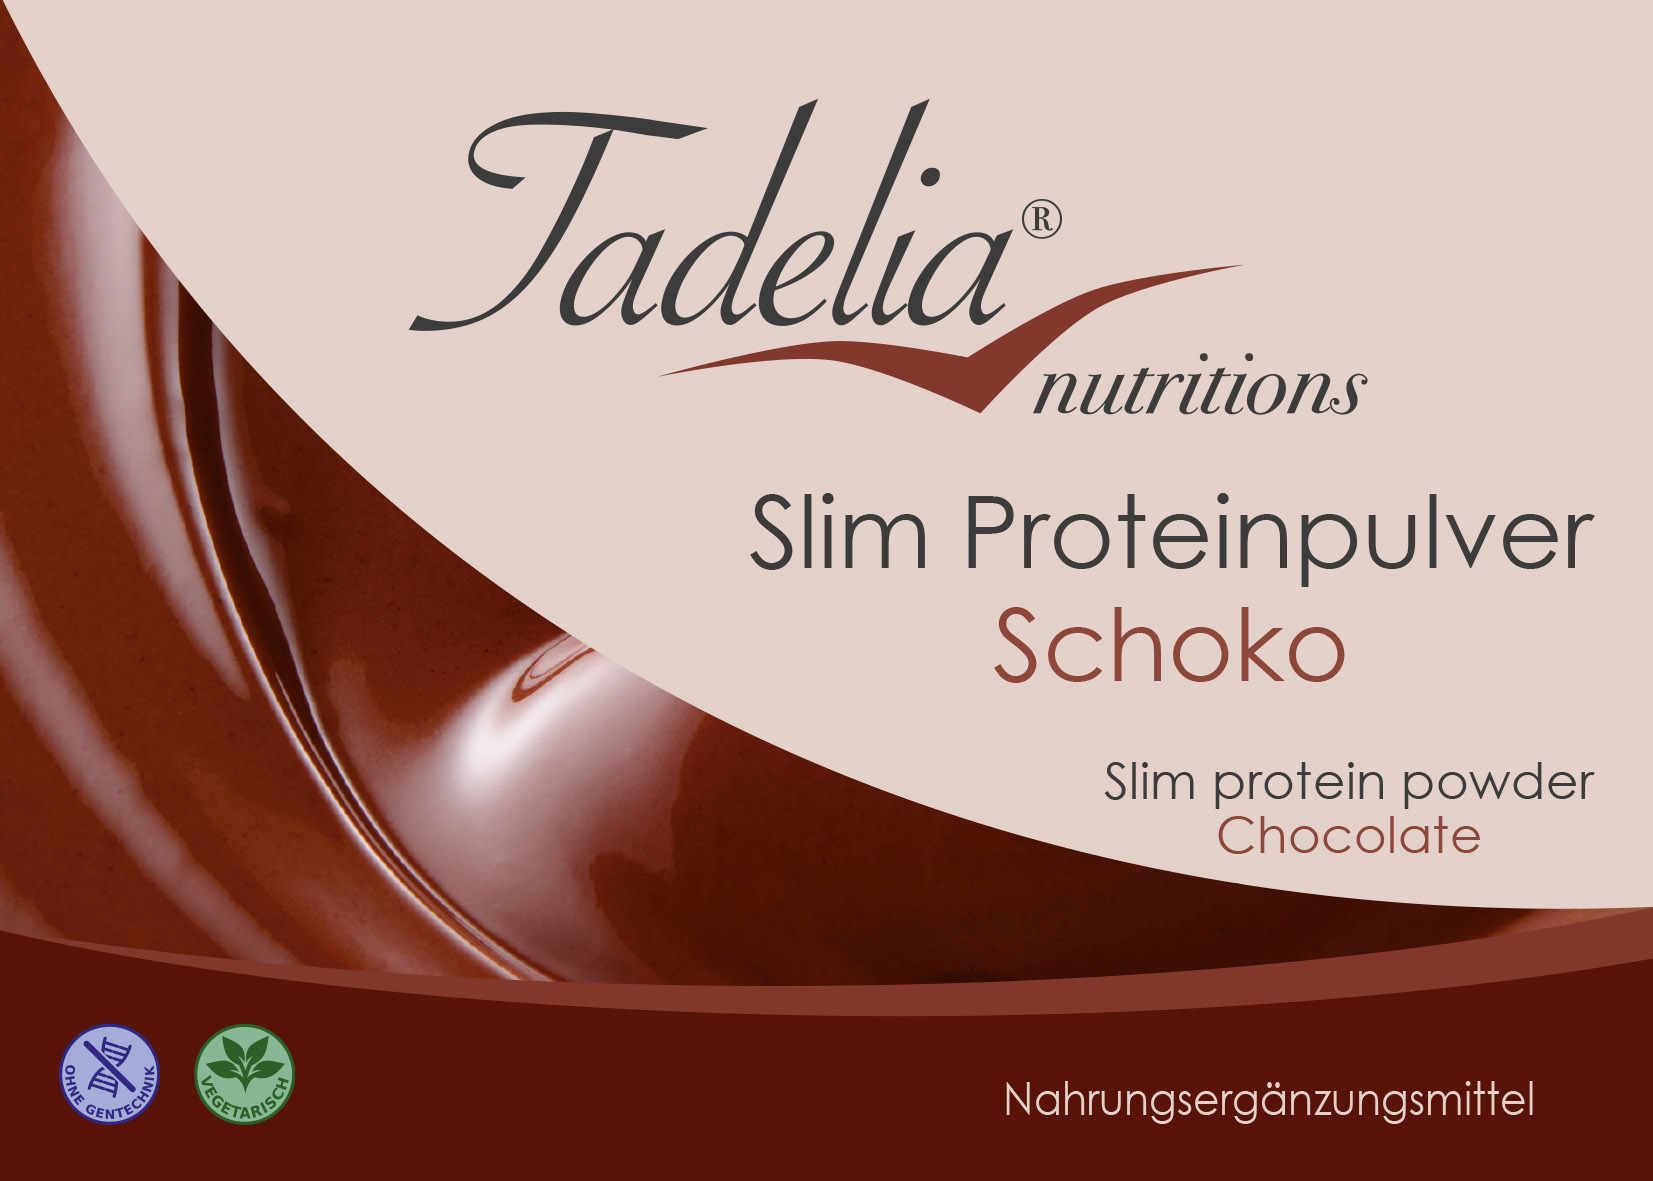 Tadelia® Slim Proteinpulver Schoko mit Tadelia hCG Stoffwechseldiätplan + Hormony Complex G B12 Tropfen